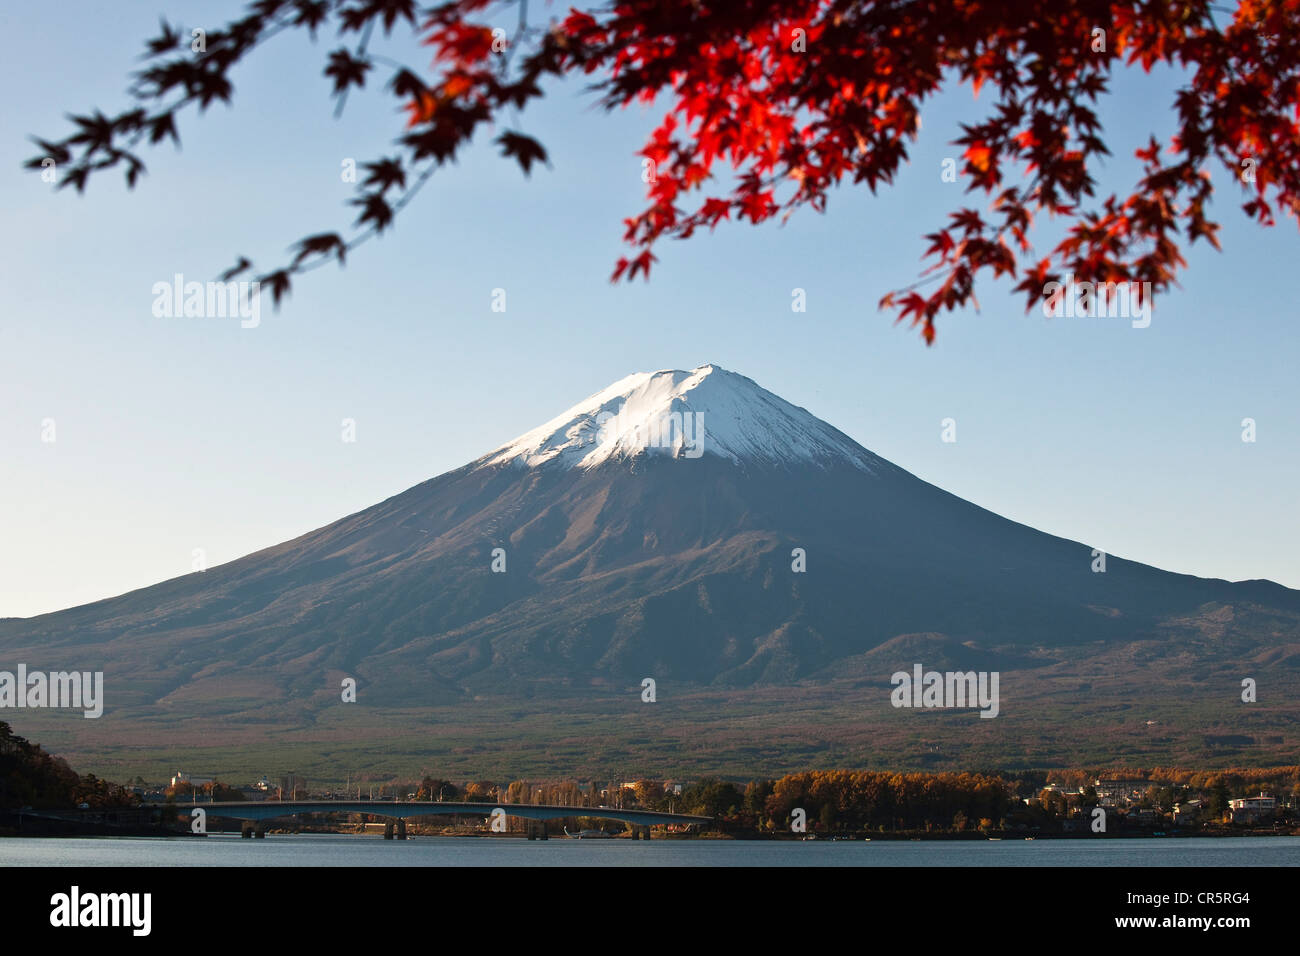 Japan, Honshu Island, Mount Fuji Region, the Kawaguchi Lake with the Mount Fuji (3776m) in the background Stock Photo